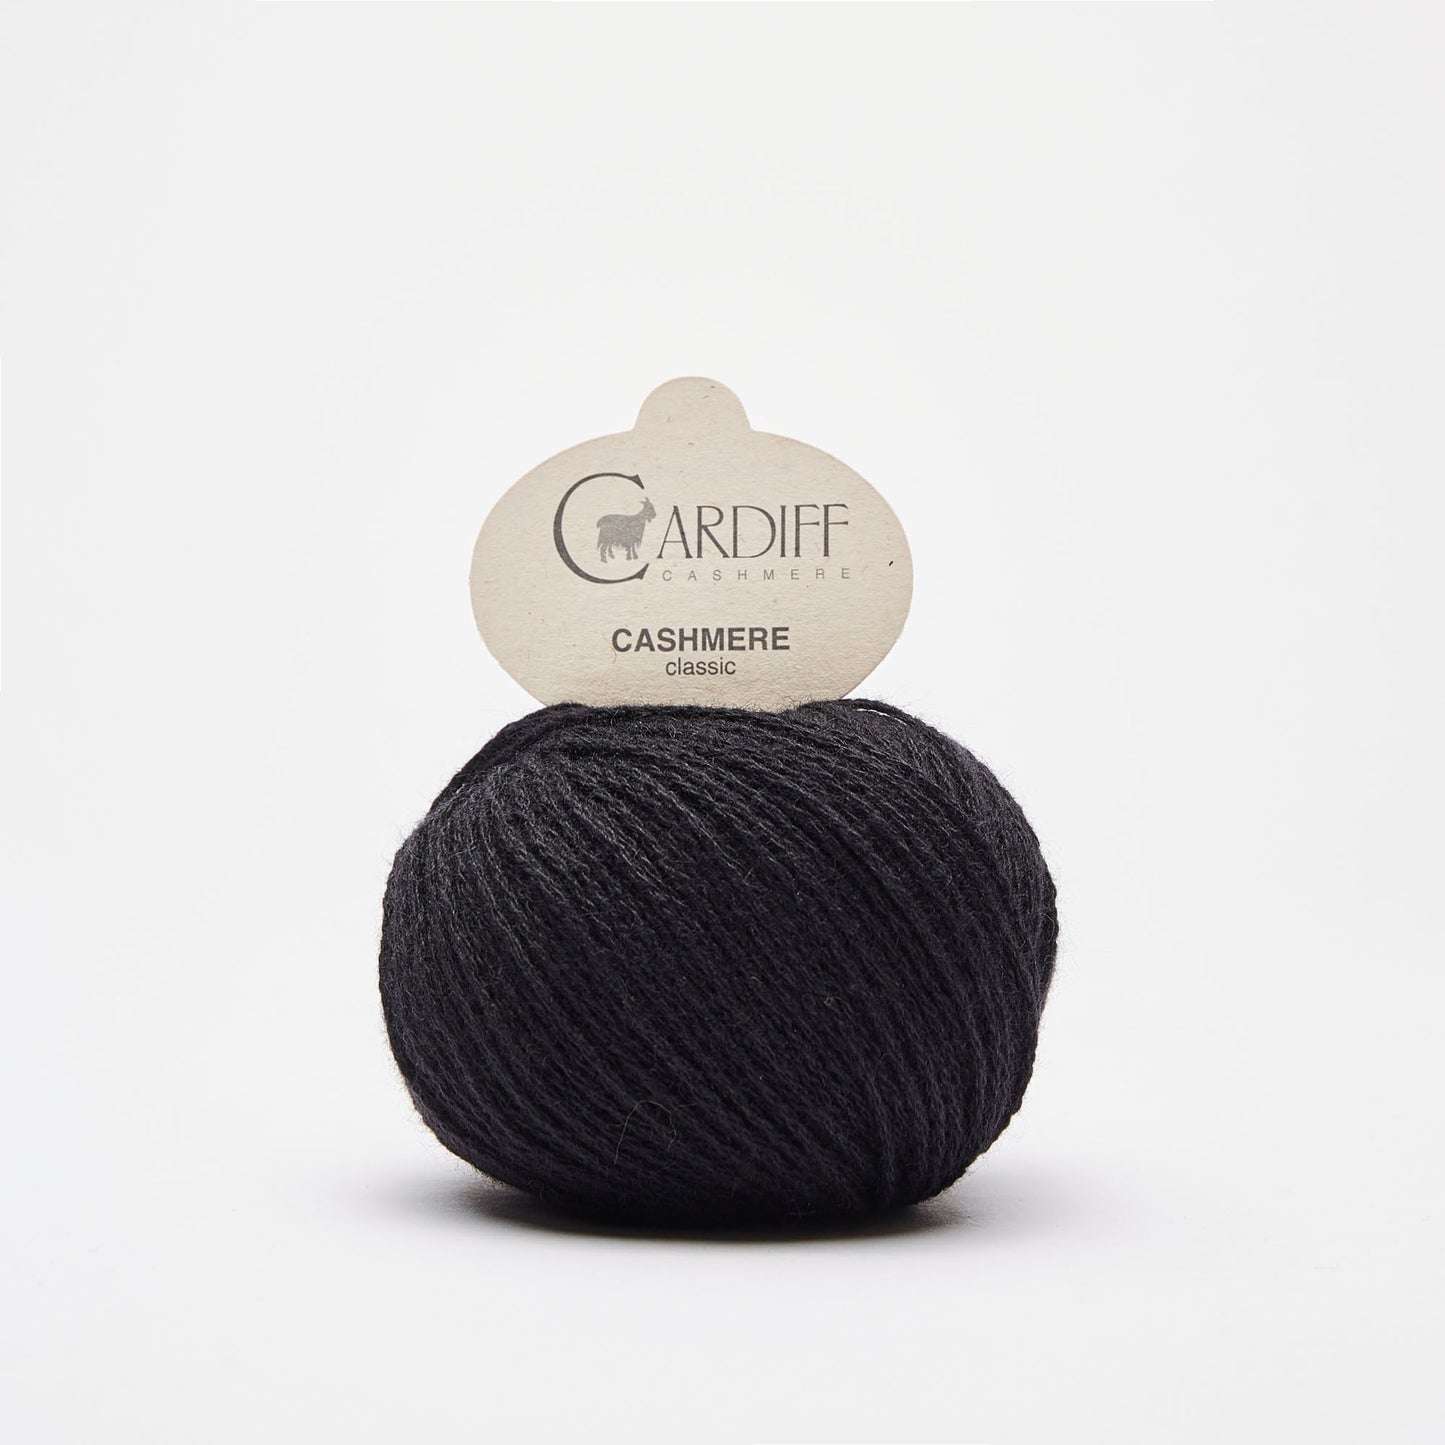 Cardiff CLASSIC gentle yarn, 516, NERO, comp: 100% Cashmere